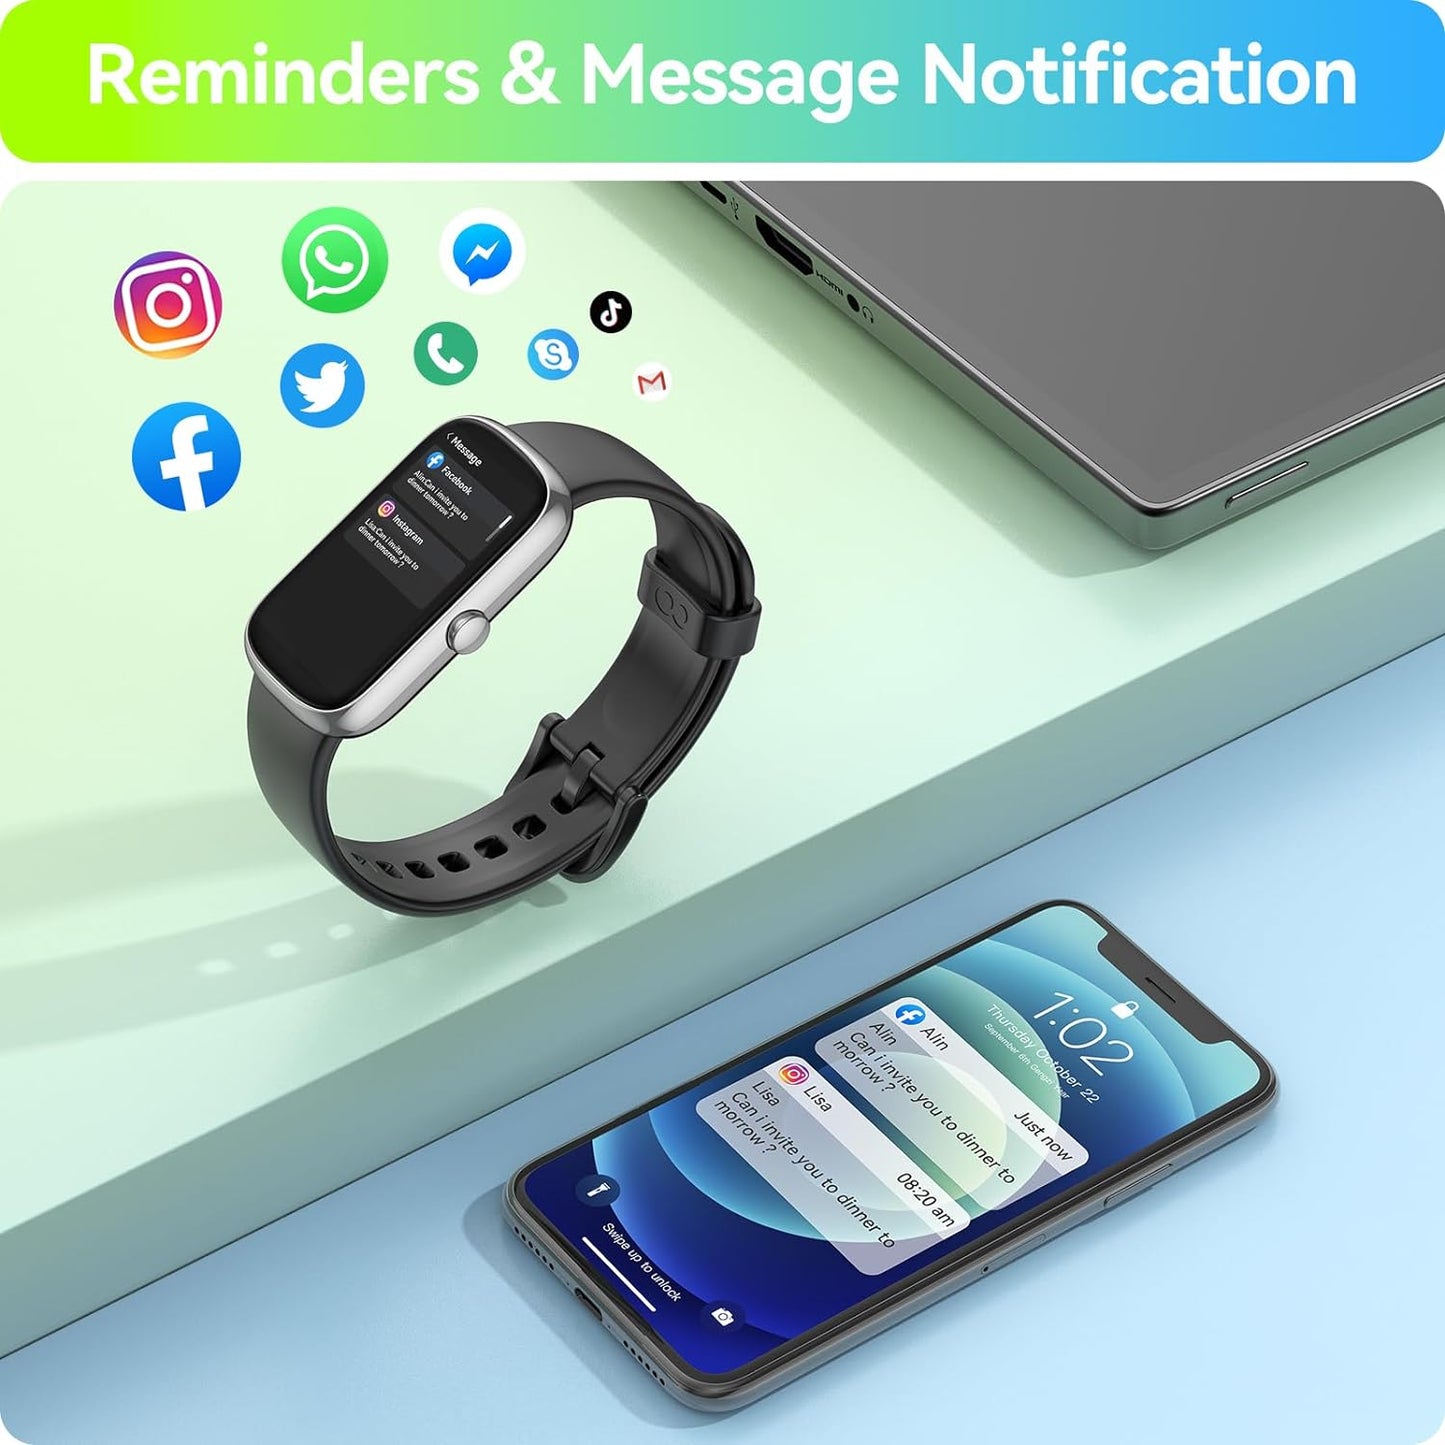 anyloop smart Band Tracker B1 smart watch